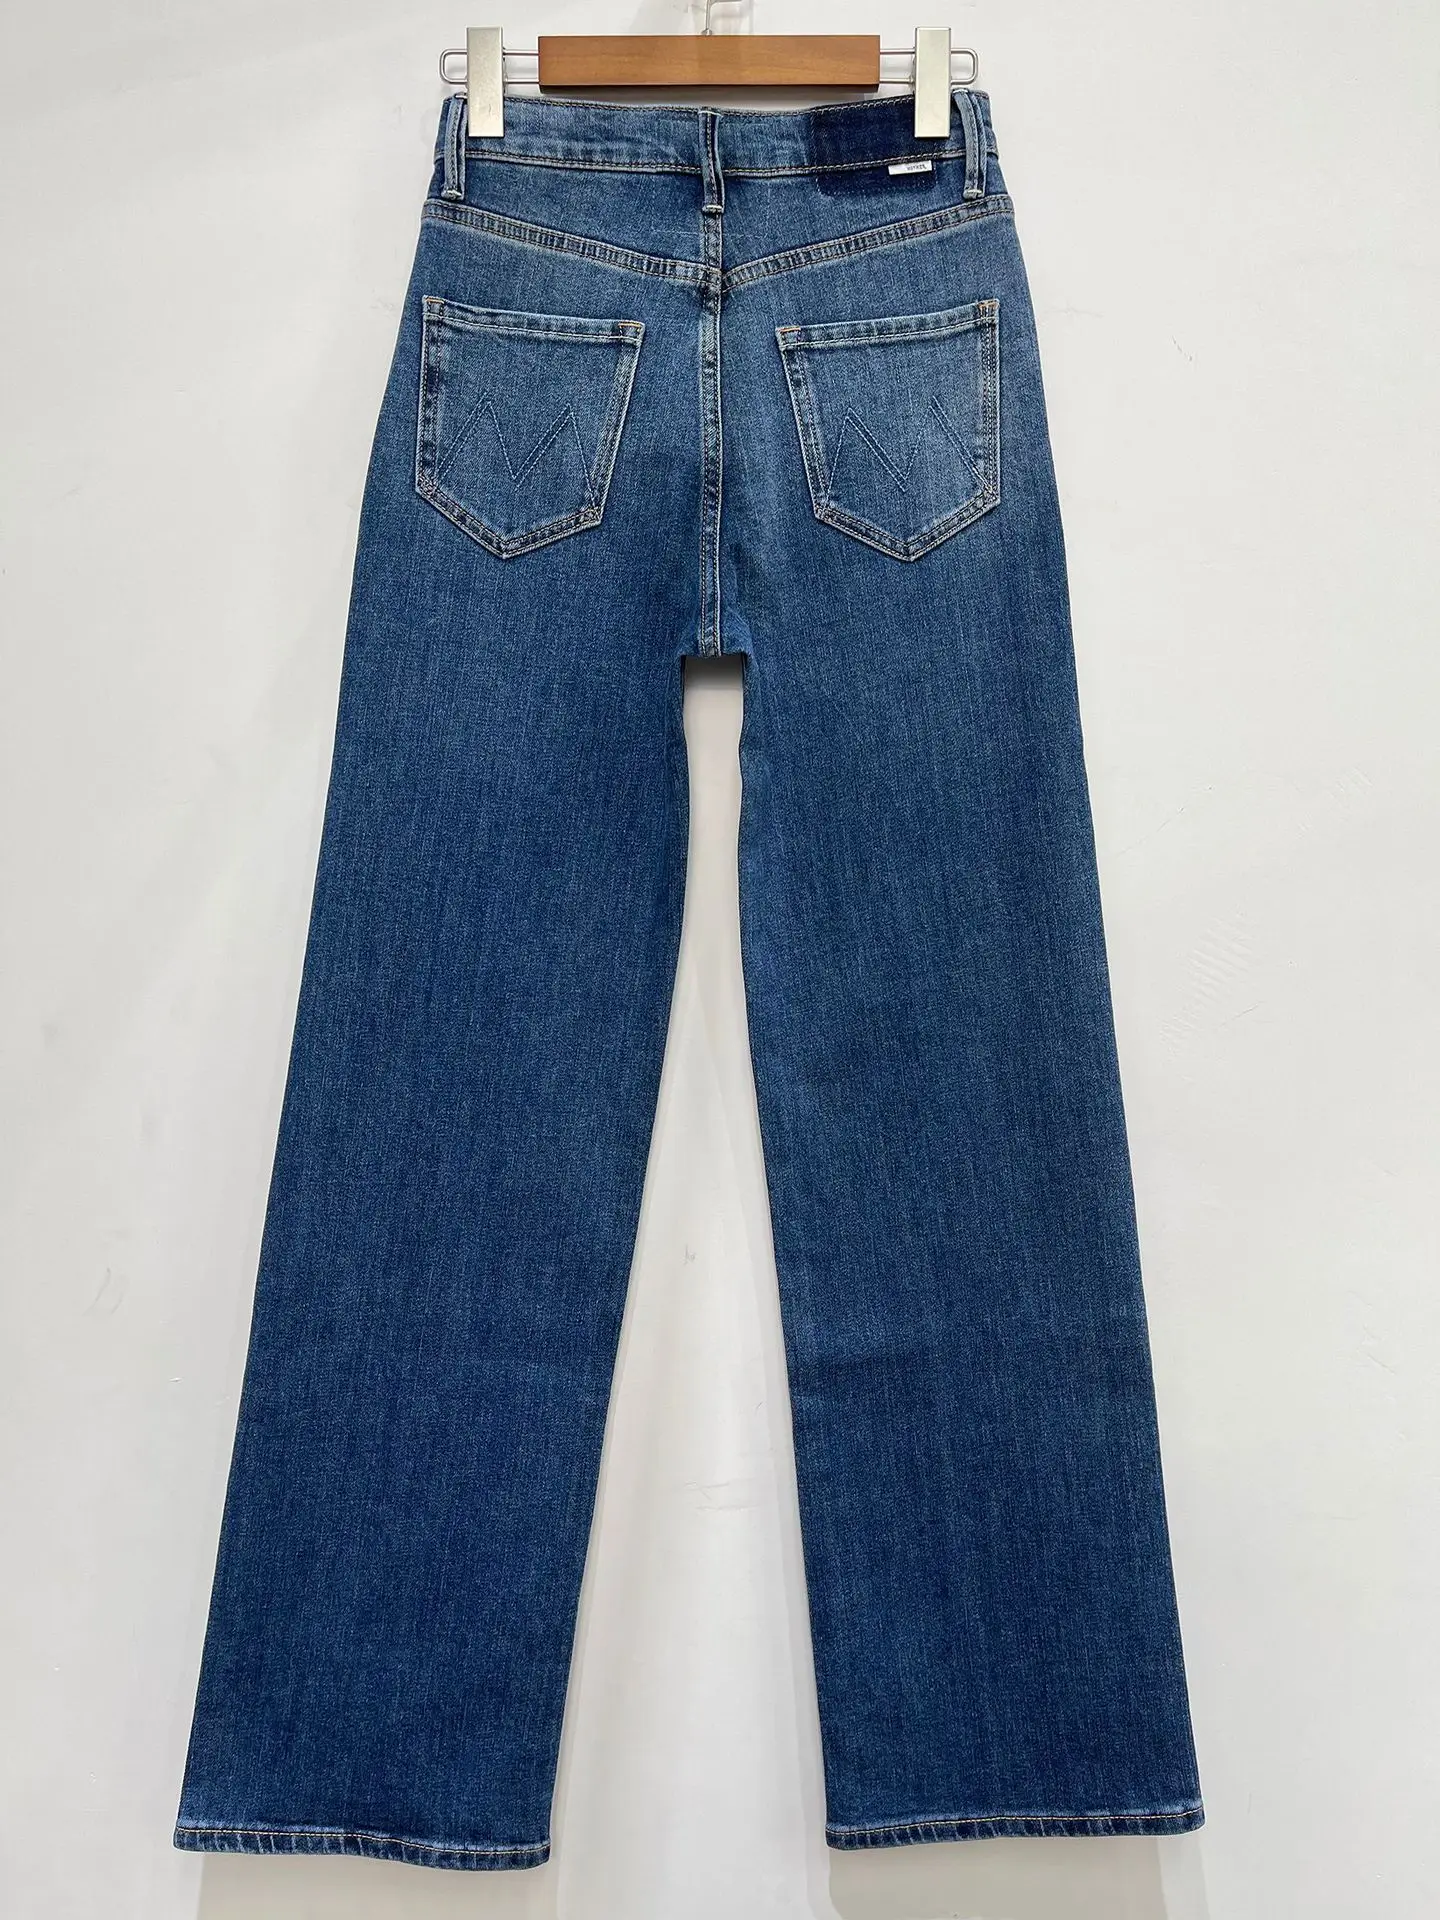 Women high waist loose jeans fashion Versatile lady Straight denim pants images - 6